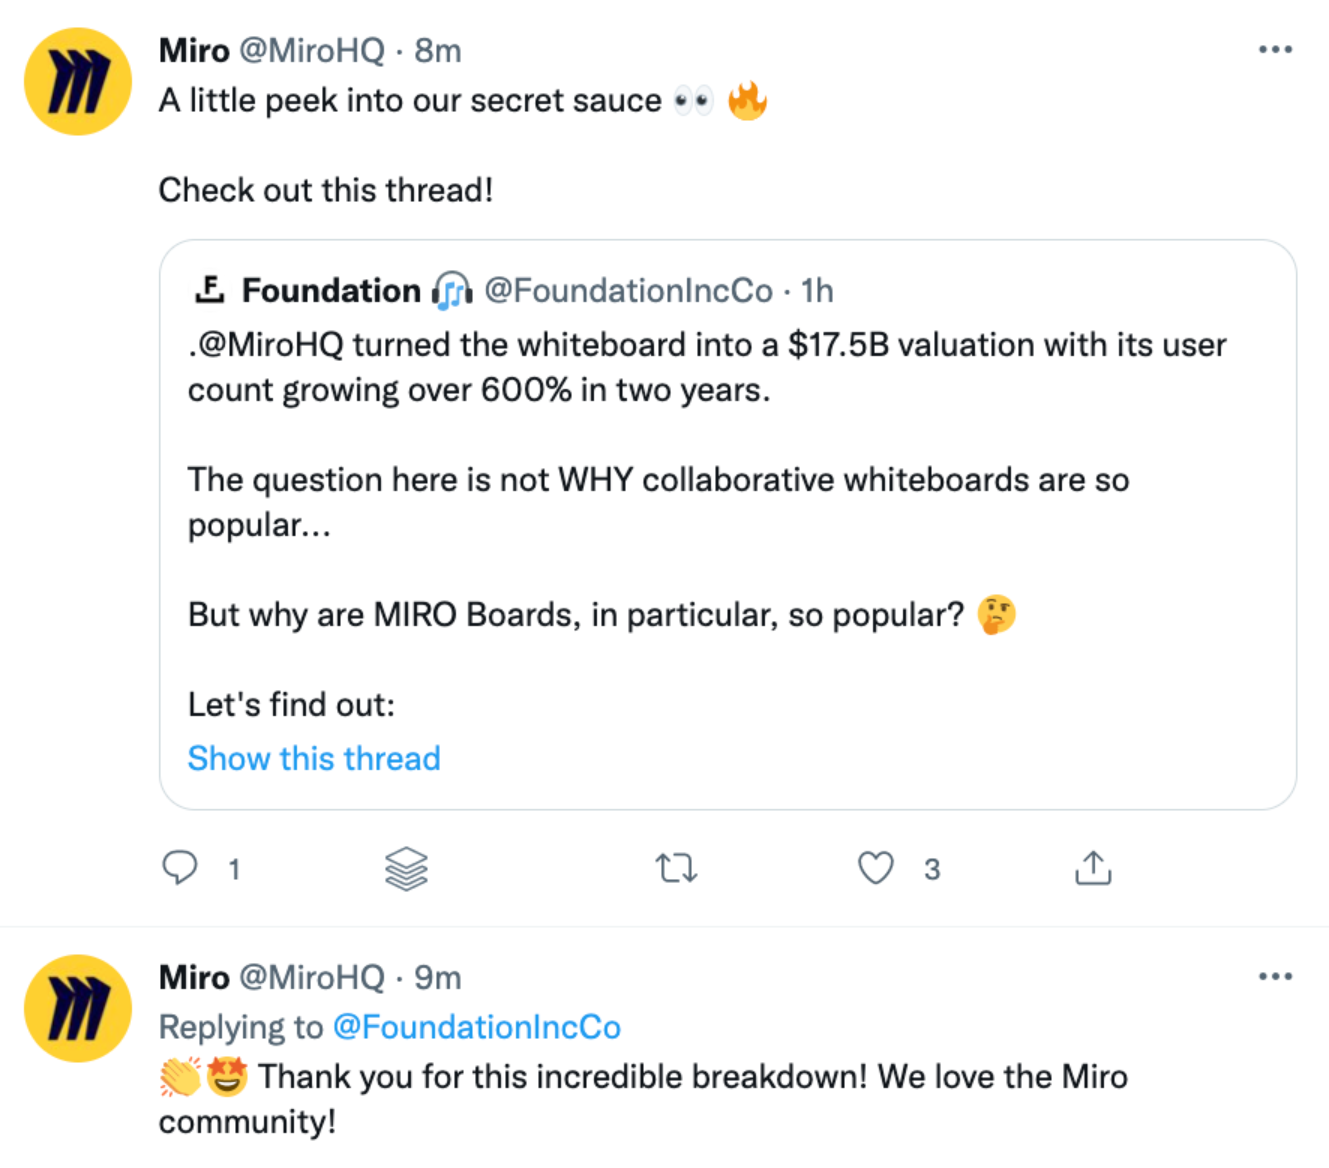 Miro tweets about Miro case study